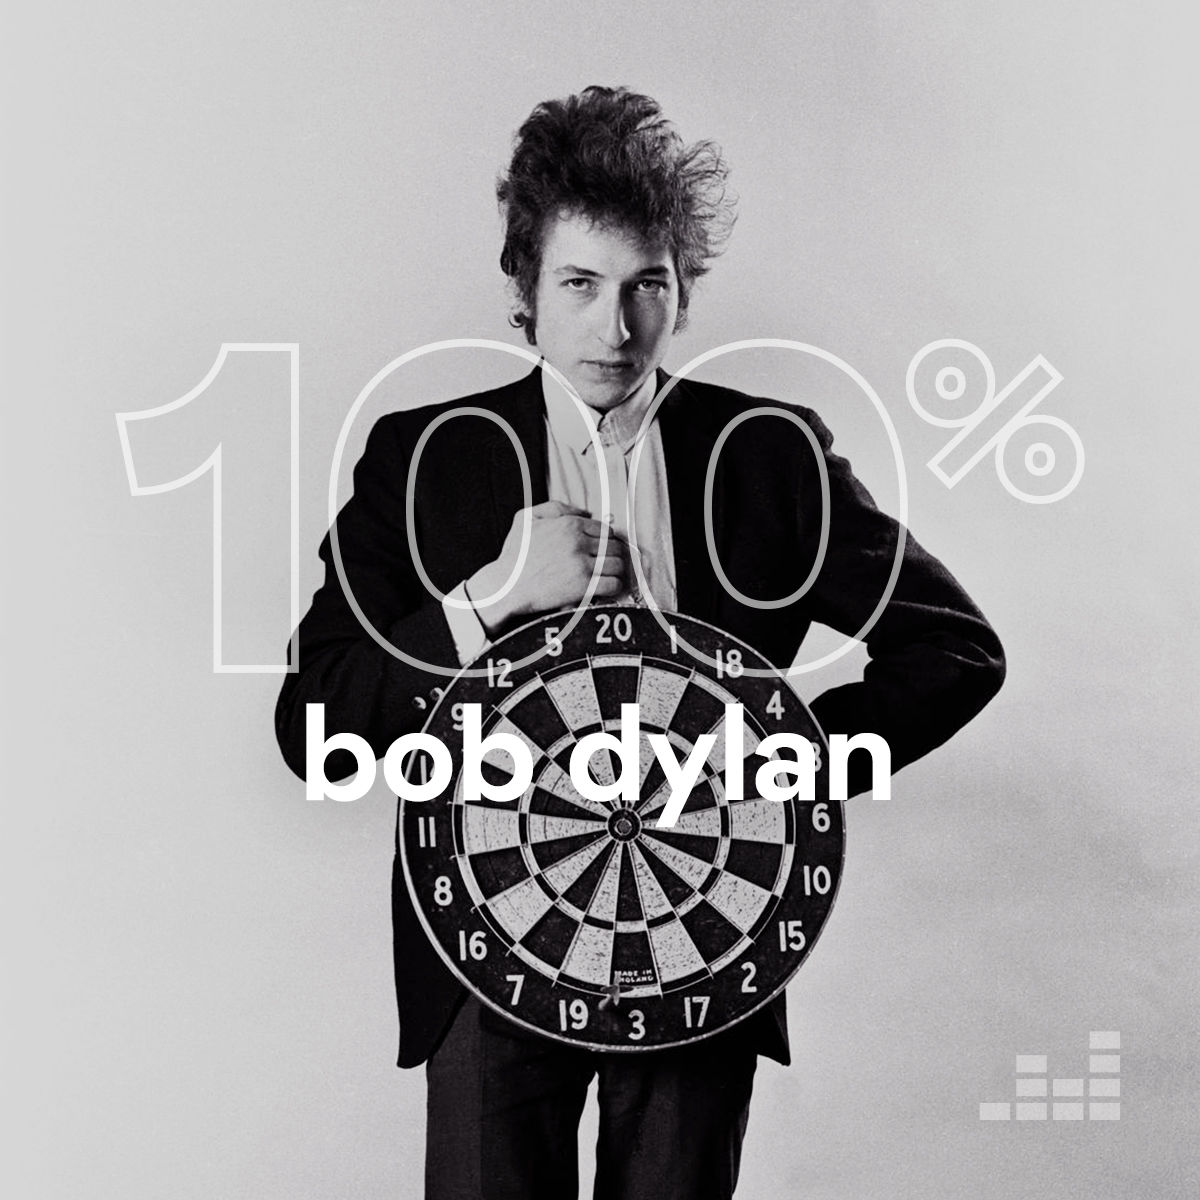 100% Bob Dylan (2022)